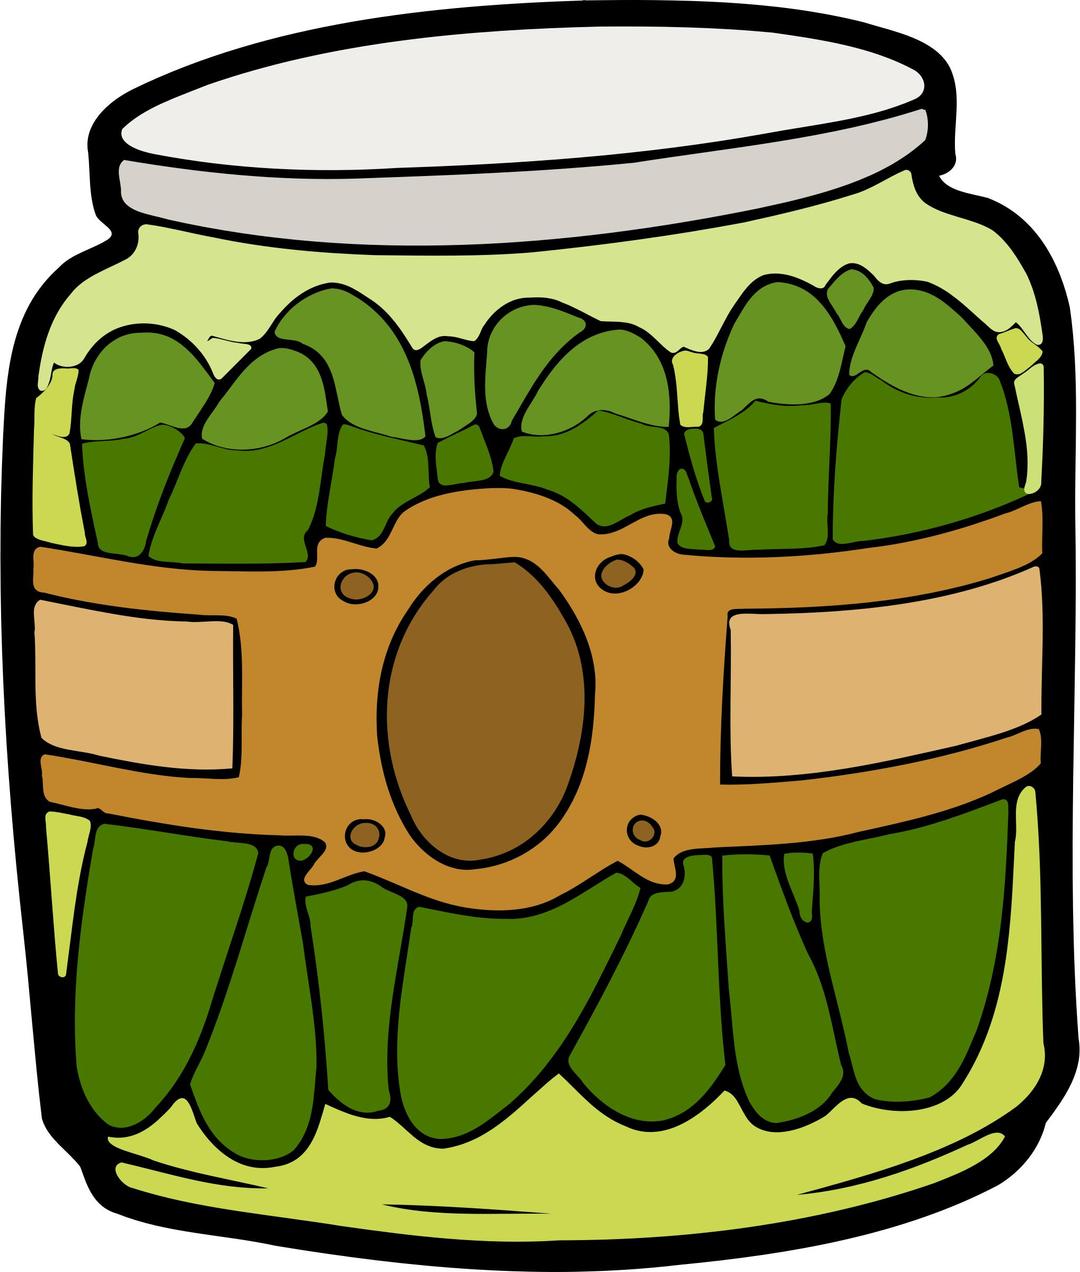 Pickles in a Jar png transparent